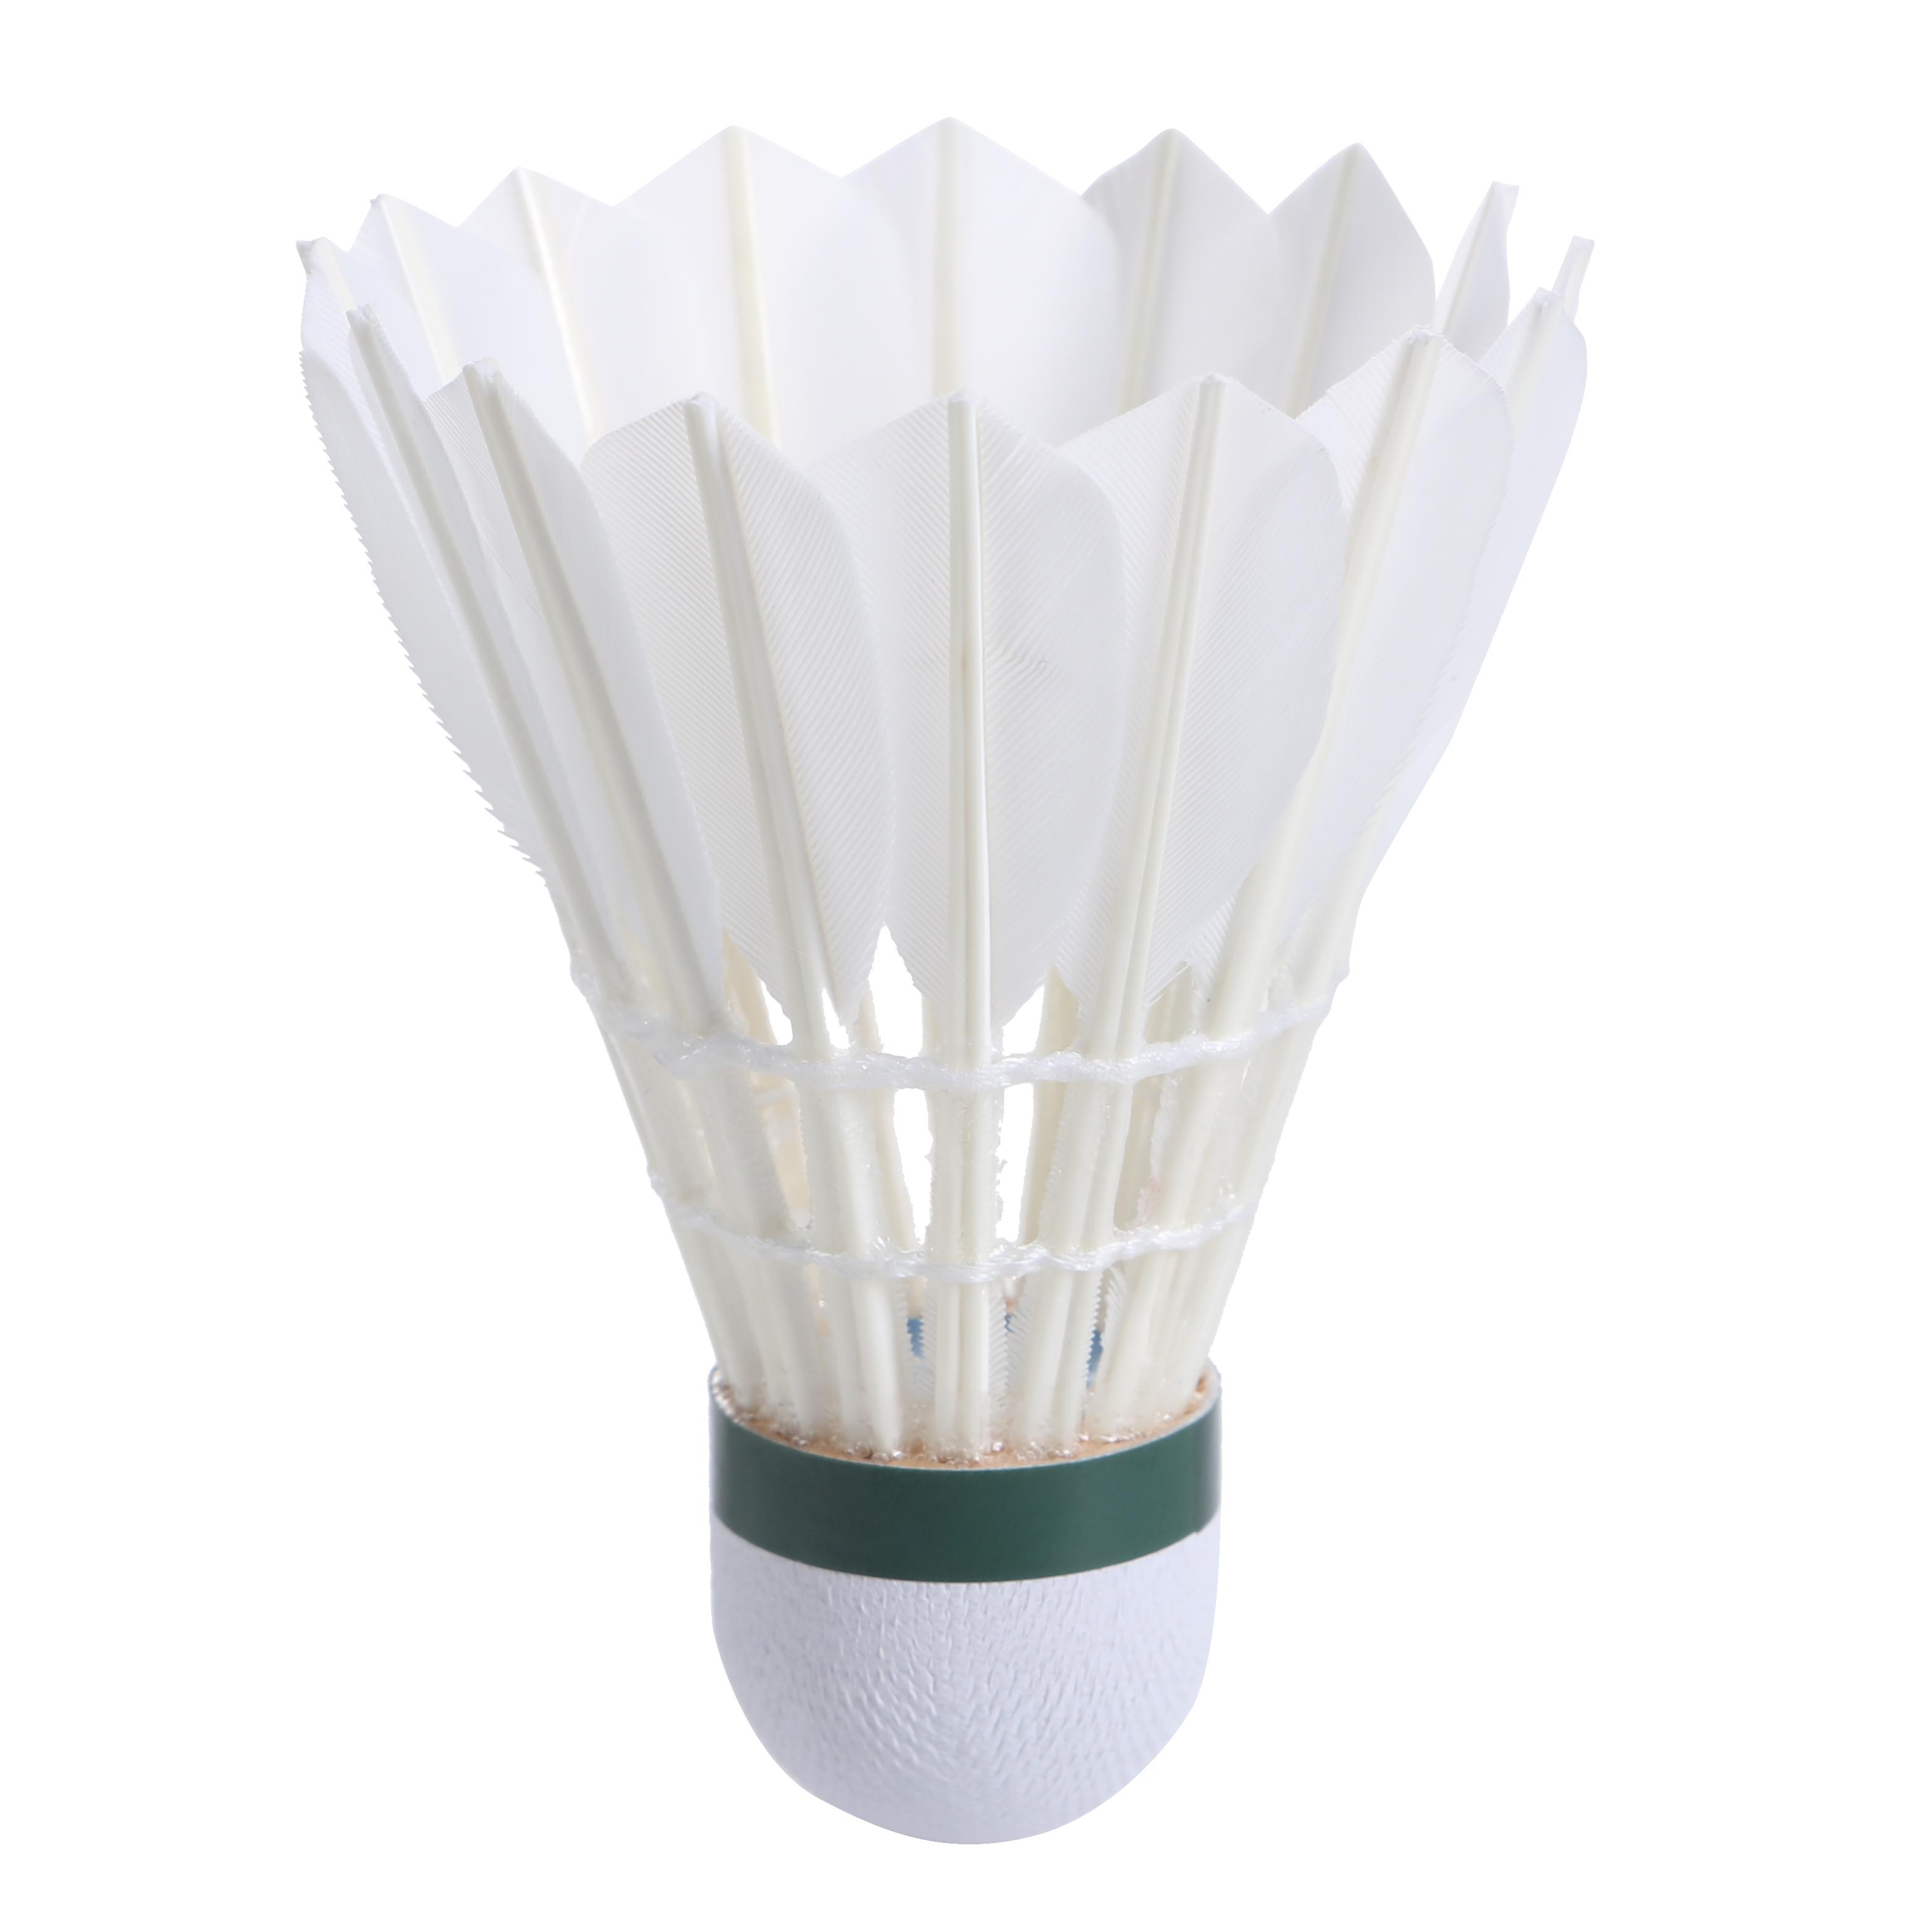 badminton feather shuttlecock review